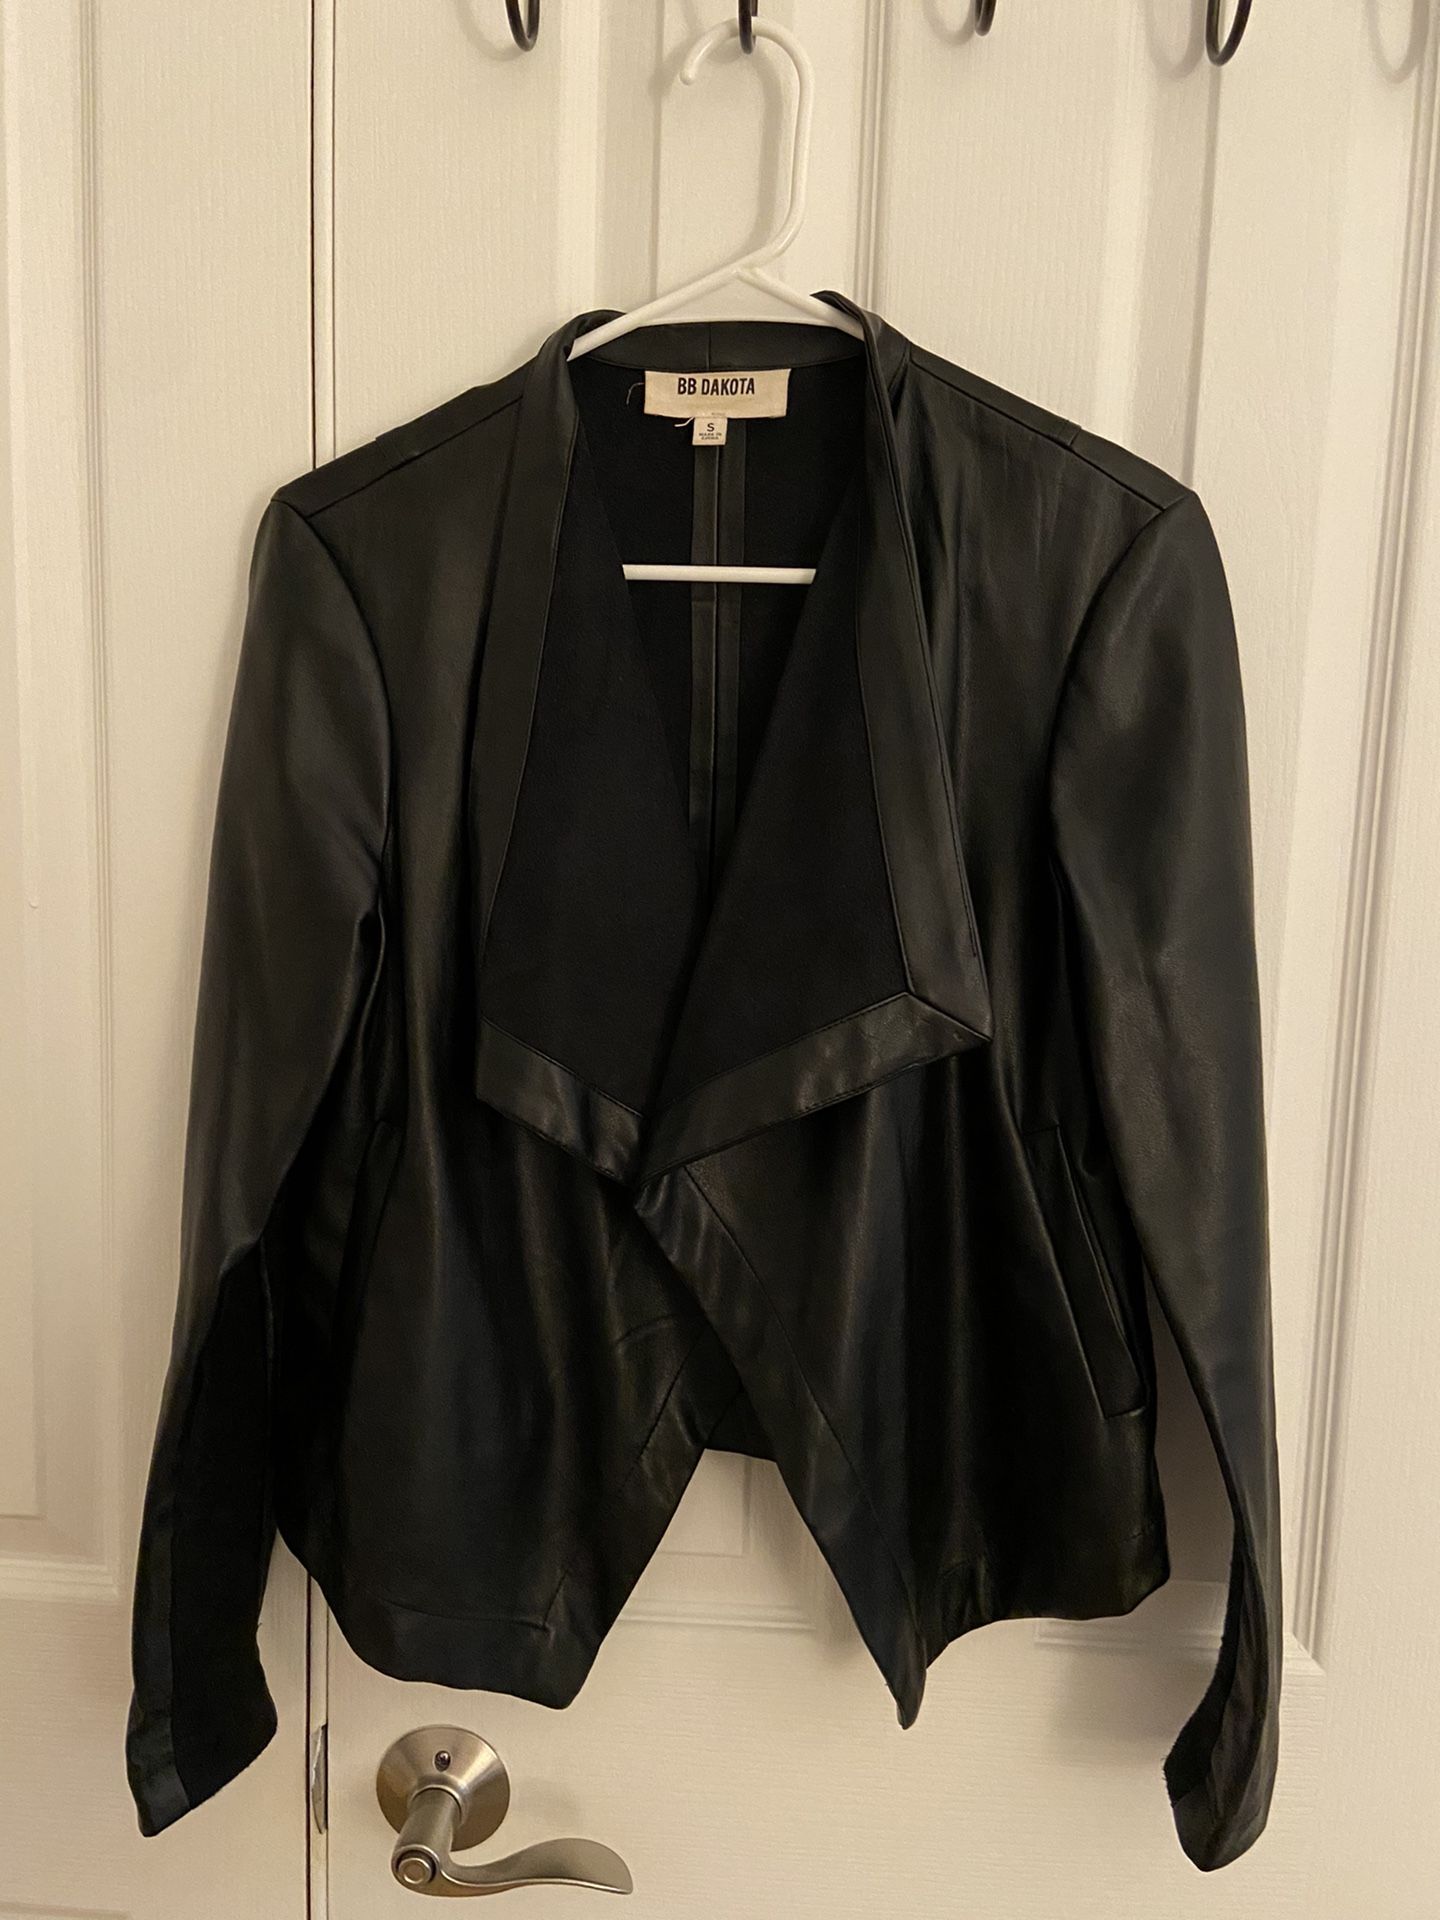 BB Dakota leather jacket